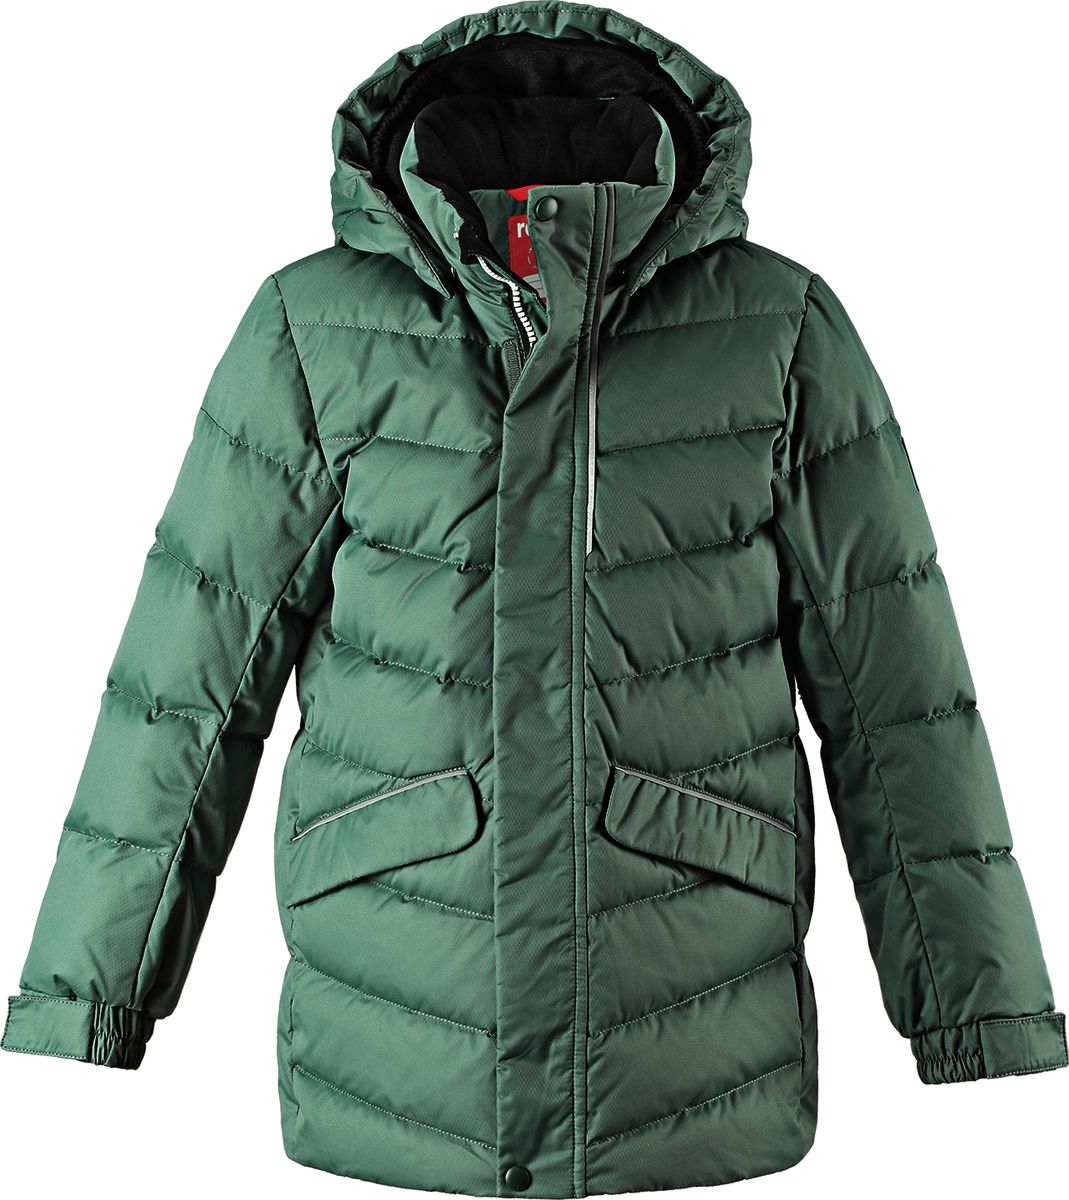 Куртка для мальчика Reima Janne, цвет: зеленый. 5313718630. Размер 164